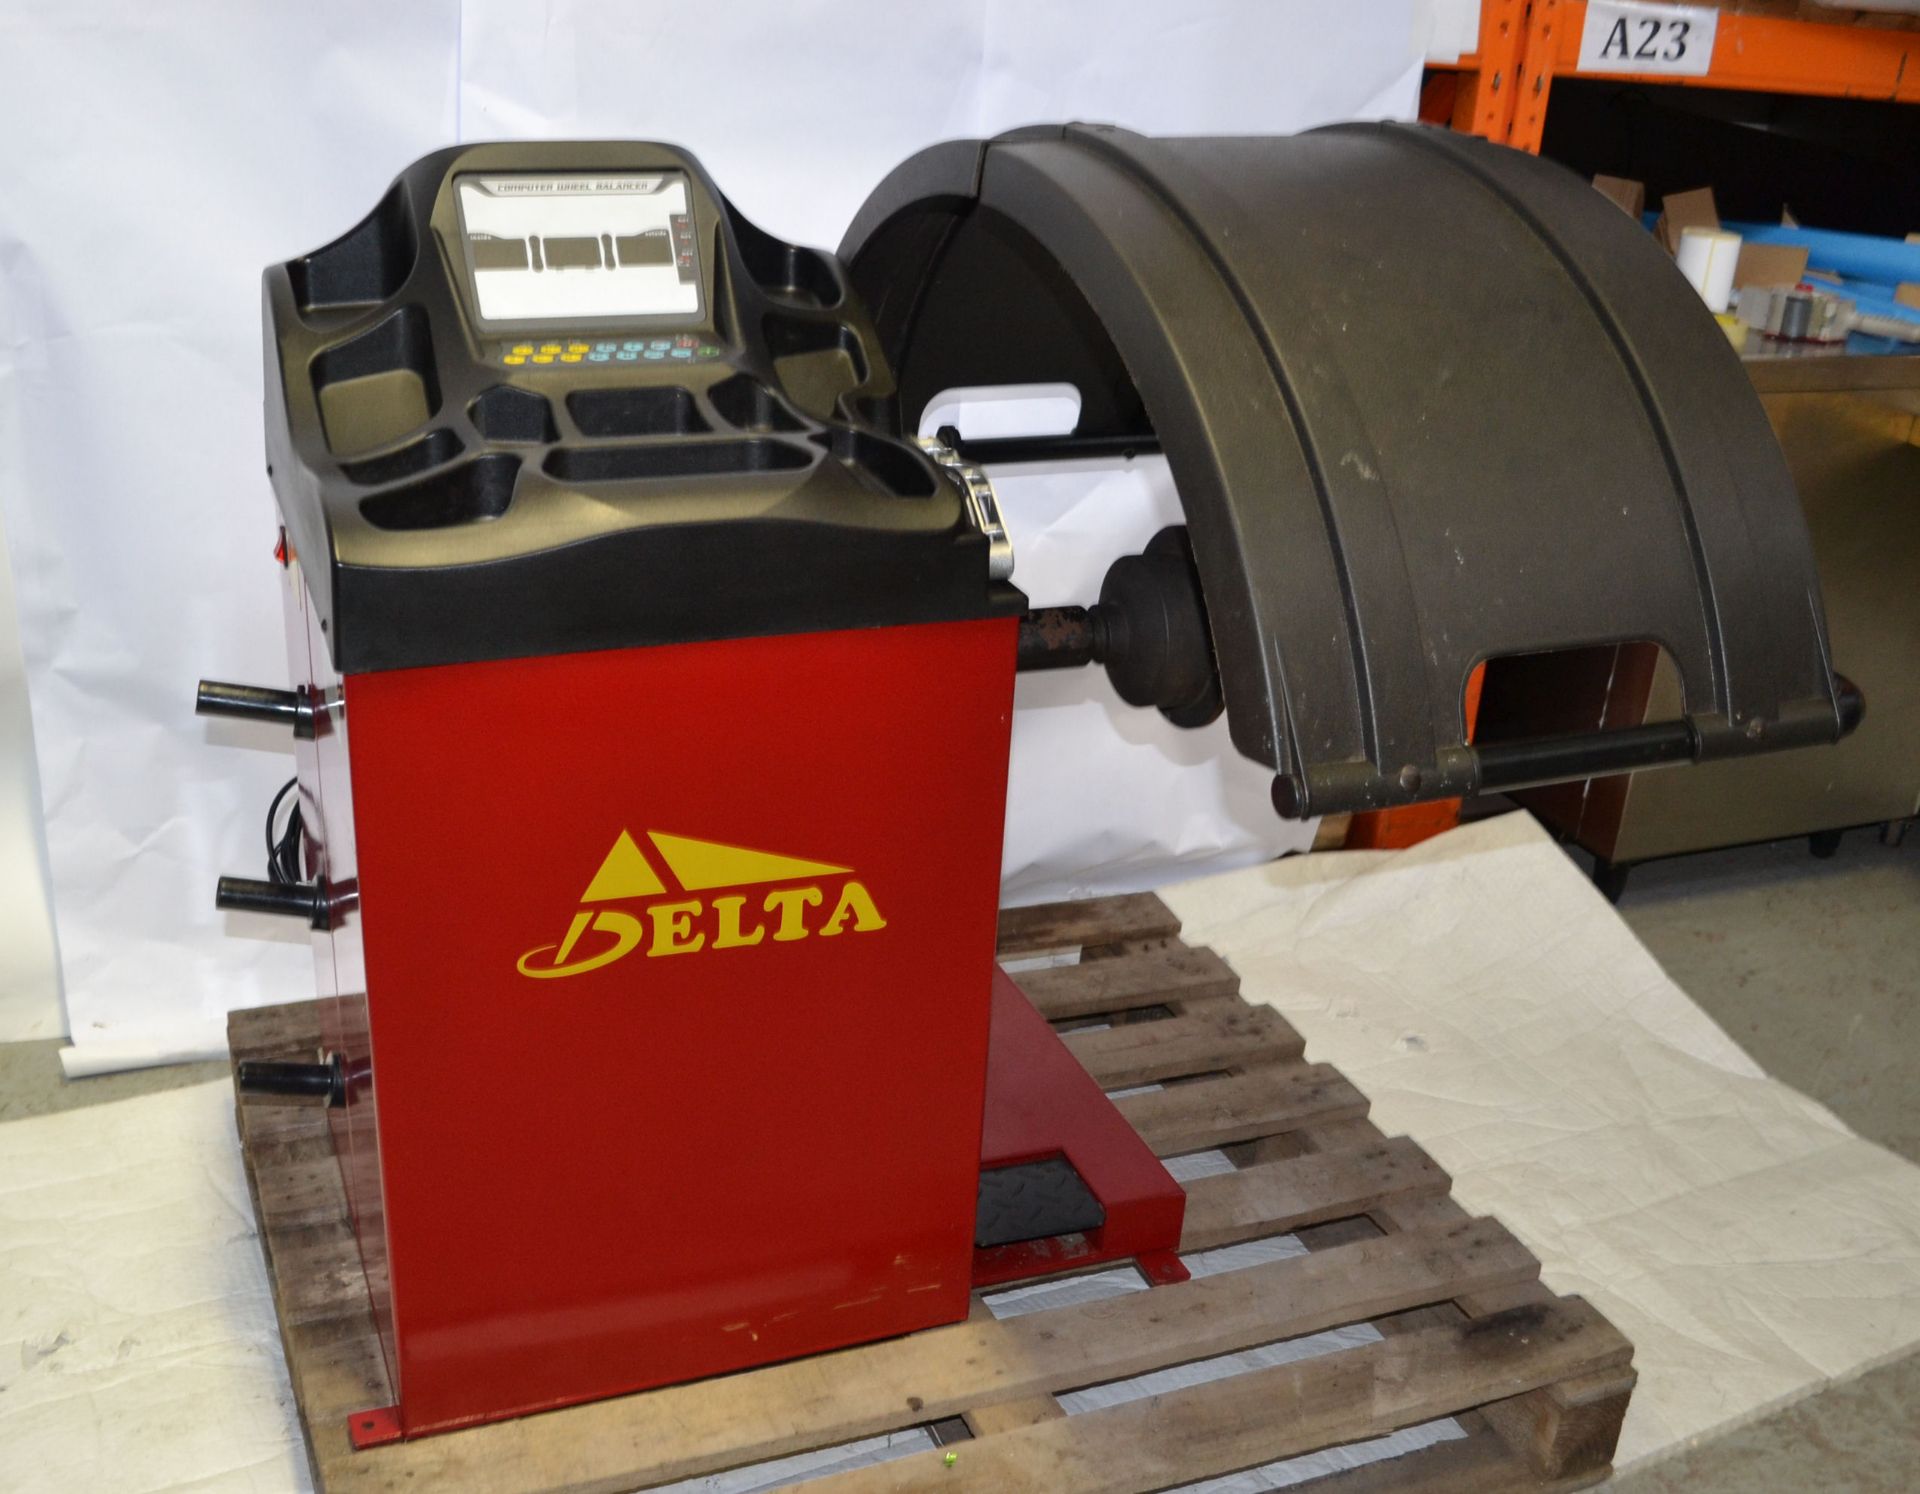 1 x Delta Workshop Wheel Balancer - Model SBM95AP - Excellent Condition - CL007 - Location: - Image 2 of 15